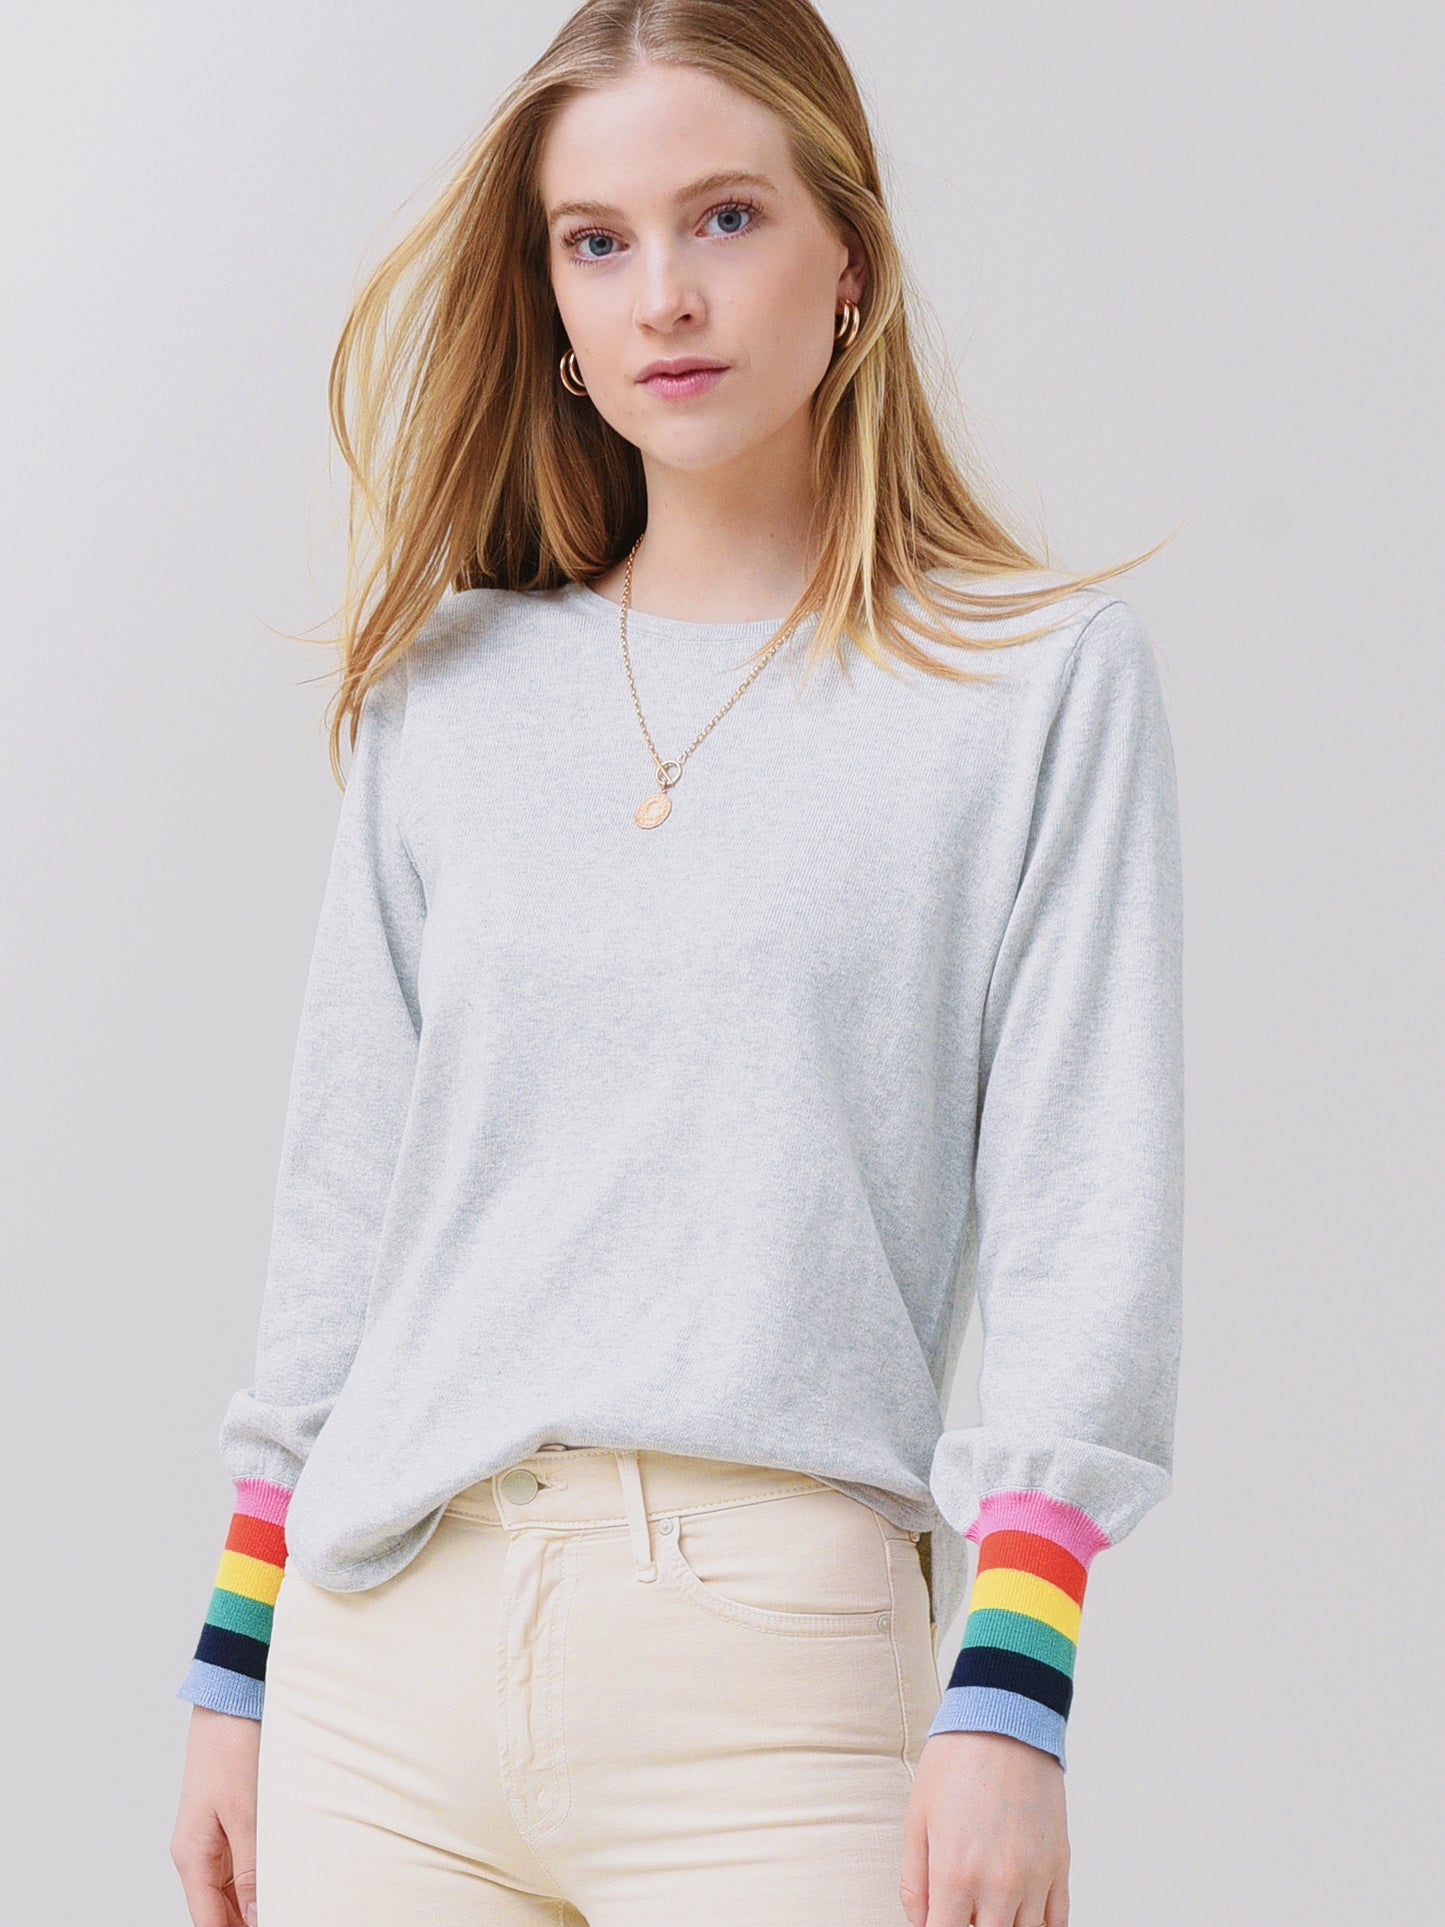 J. Society Women's Stripe Wrist Sweater